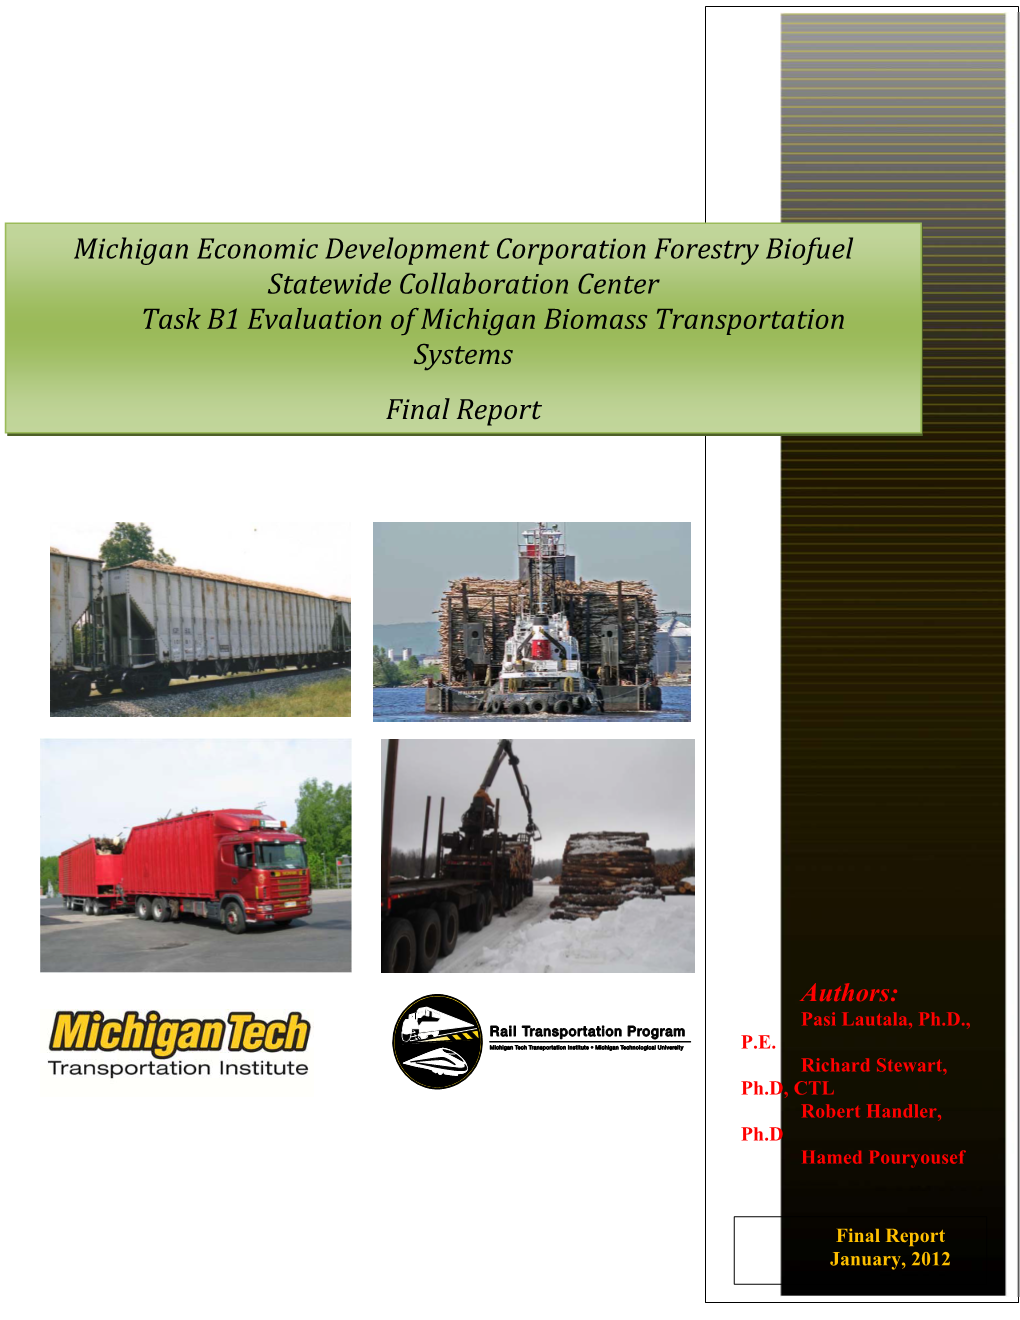 Evaluation of Michigan Biomass Transportation Systems